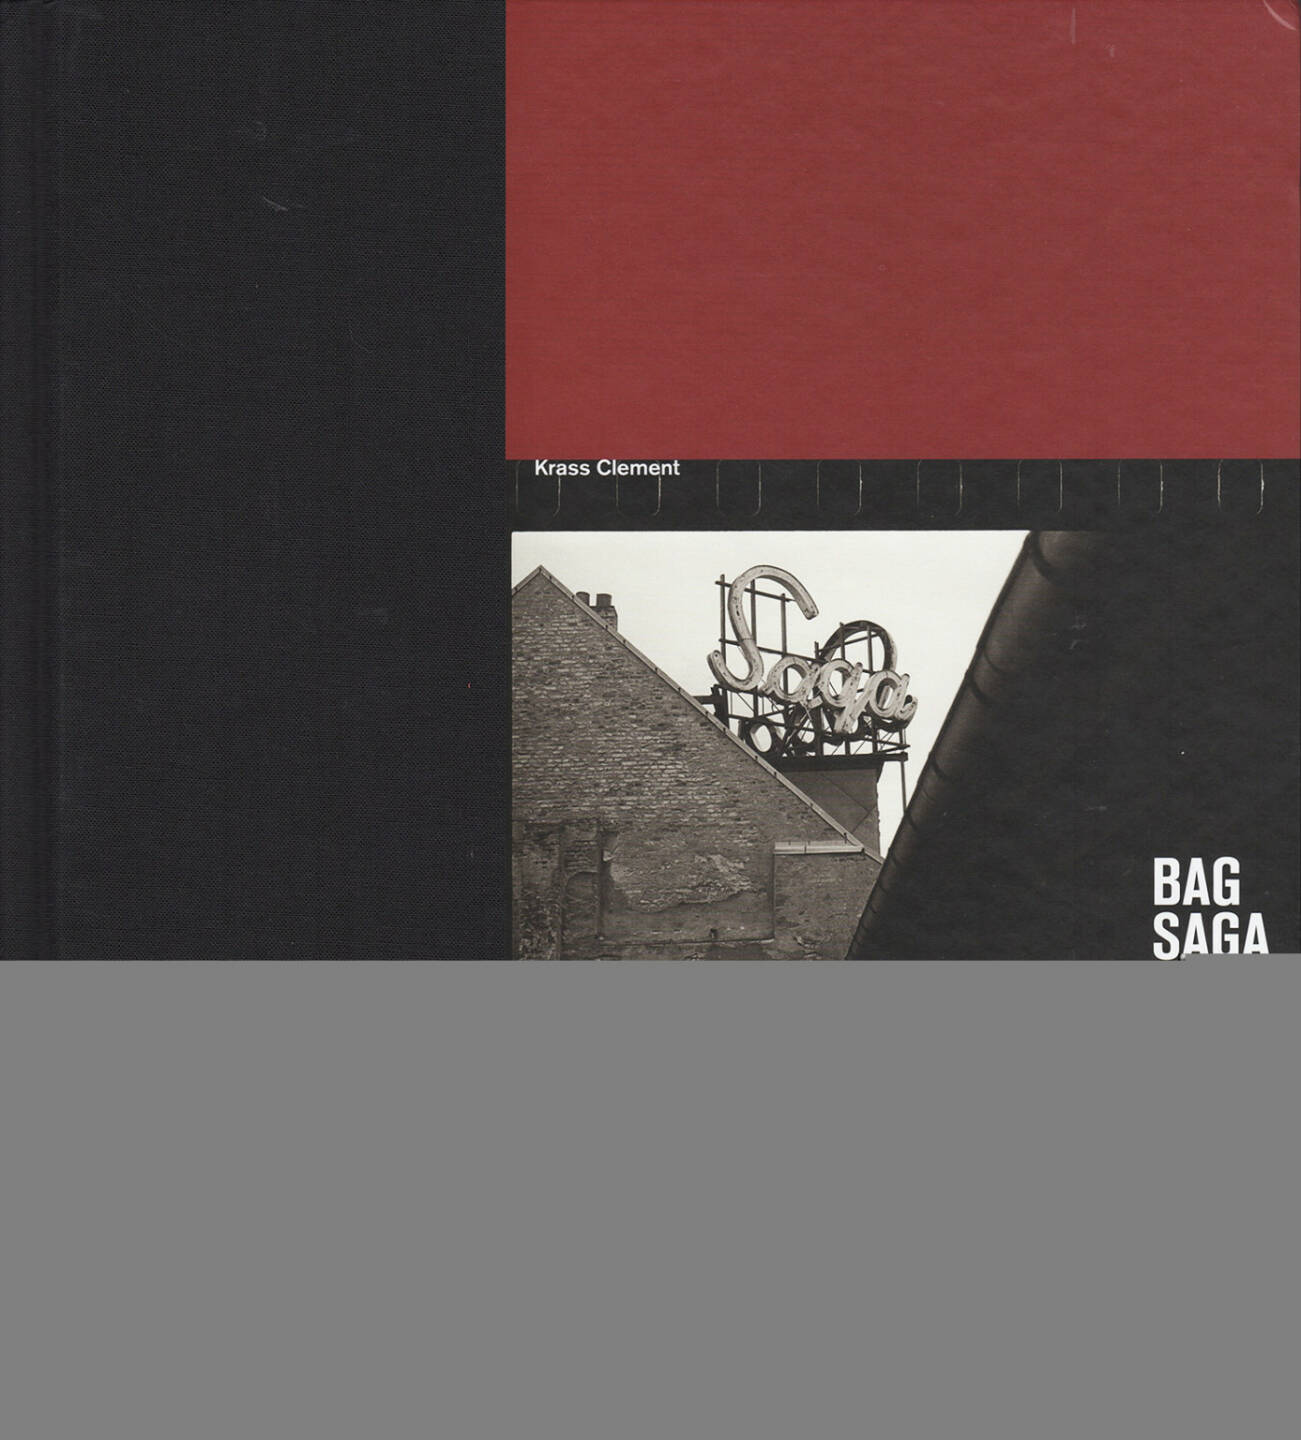 Krass Clement - Bag Saga Blok, Gyldendal 2014, Cover - http://josefchladek.com/book/krass_clement_-_bag_saga_blok